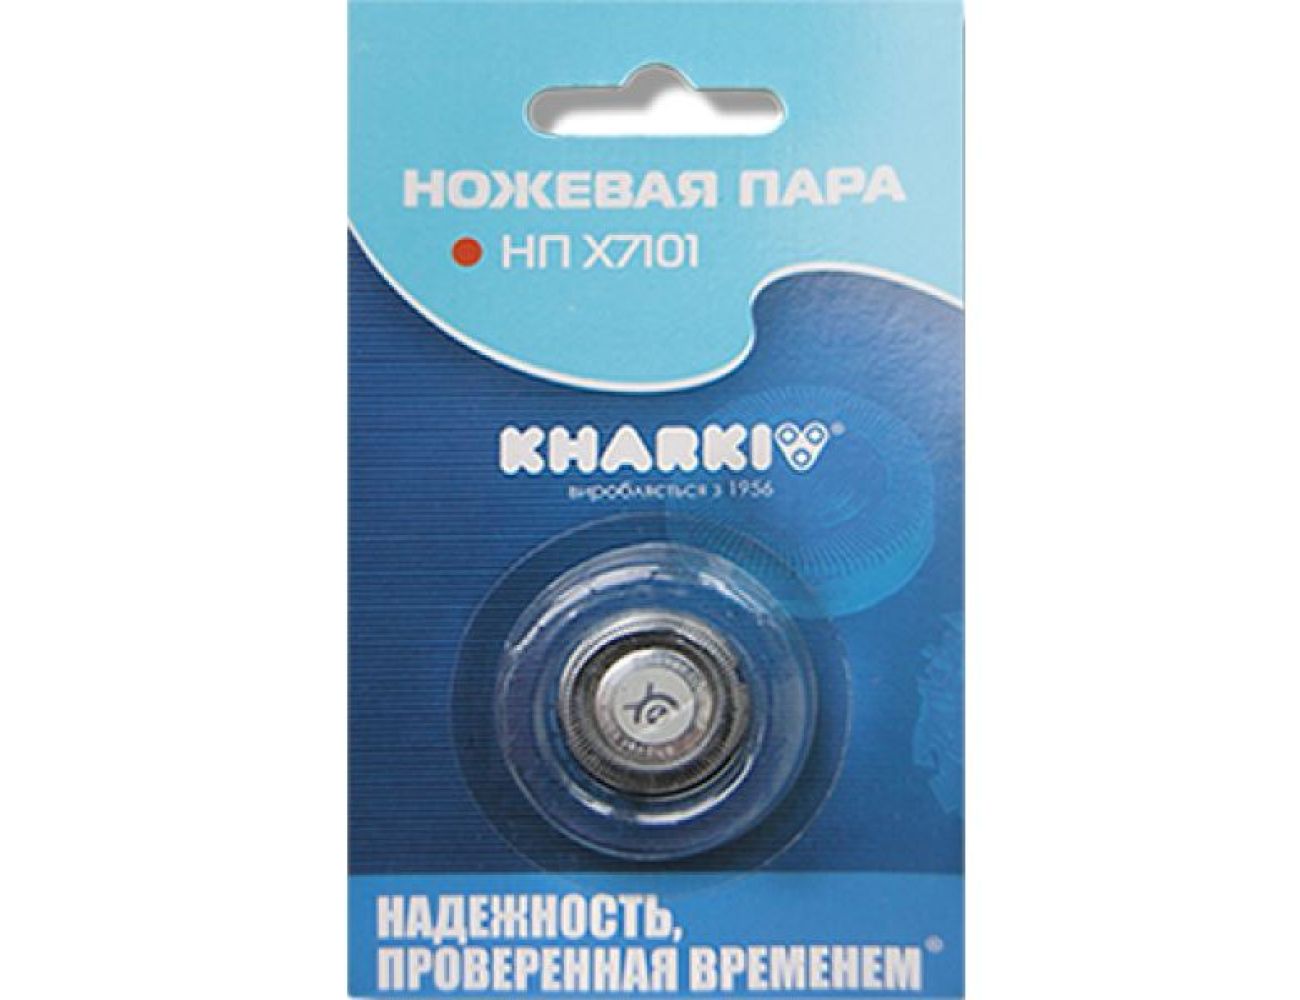 Ножевая пара Х 7101 для бритв Харьков в блистере